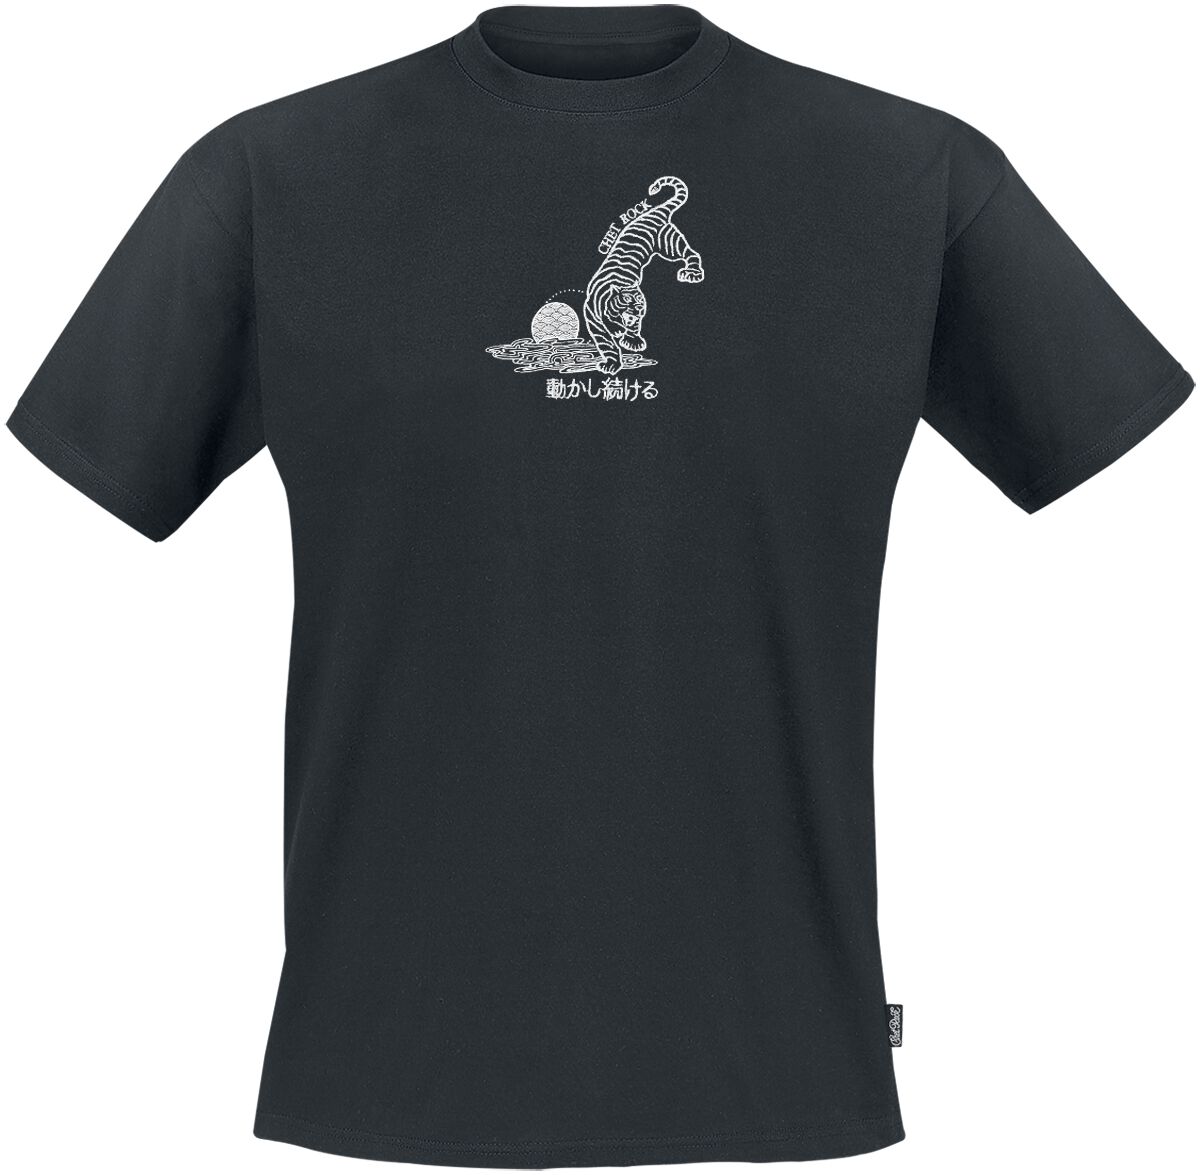 Chet Rock Crouching Tiger T-Shirt schwarz in L